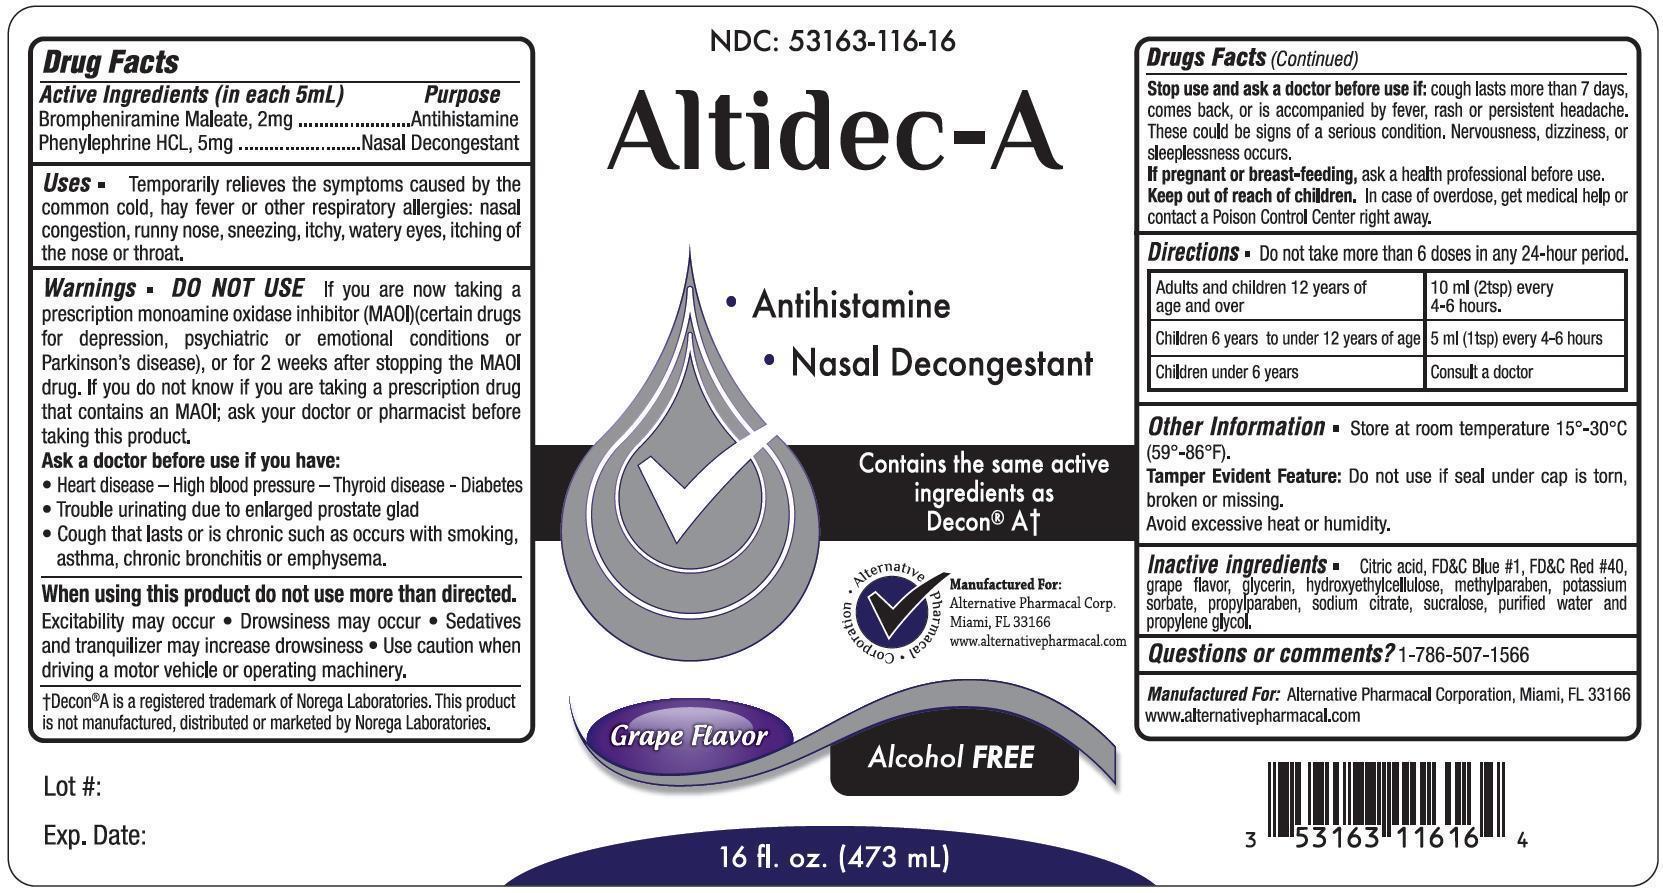 Altidec-A